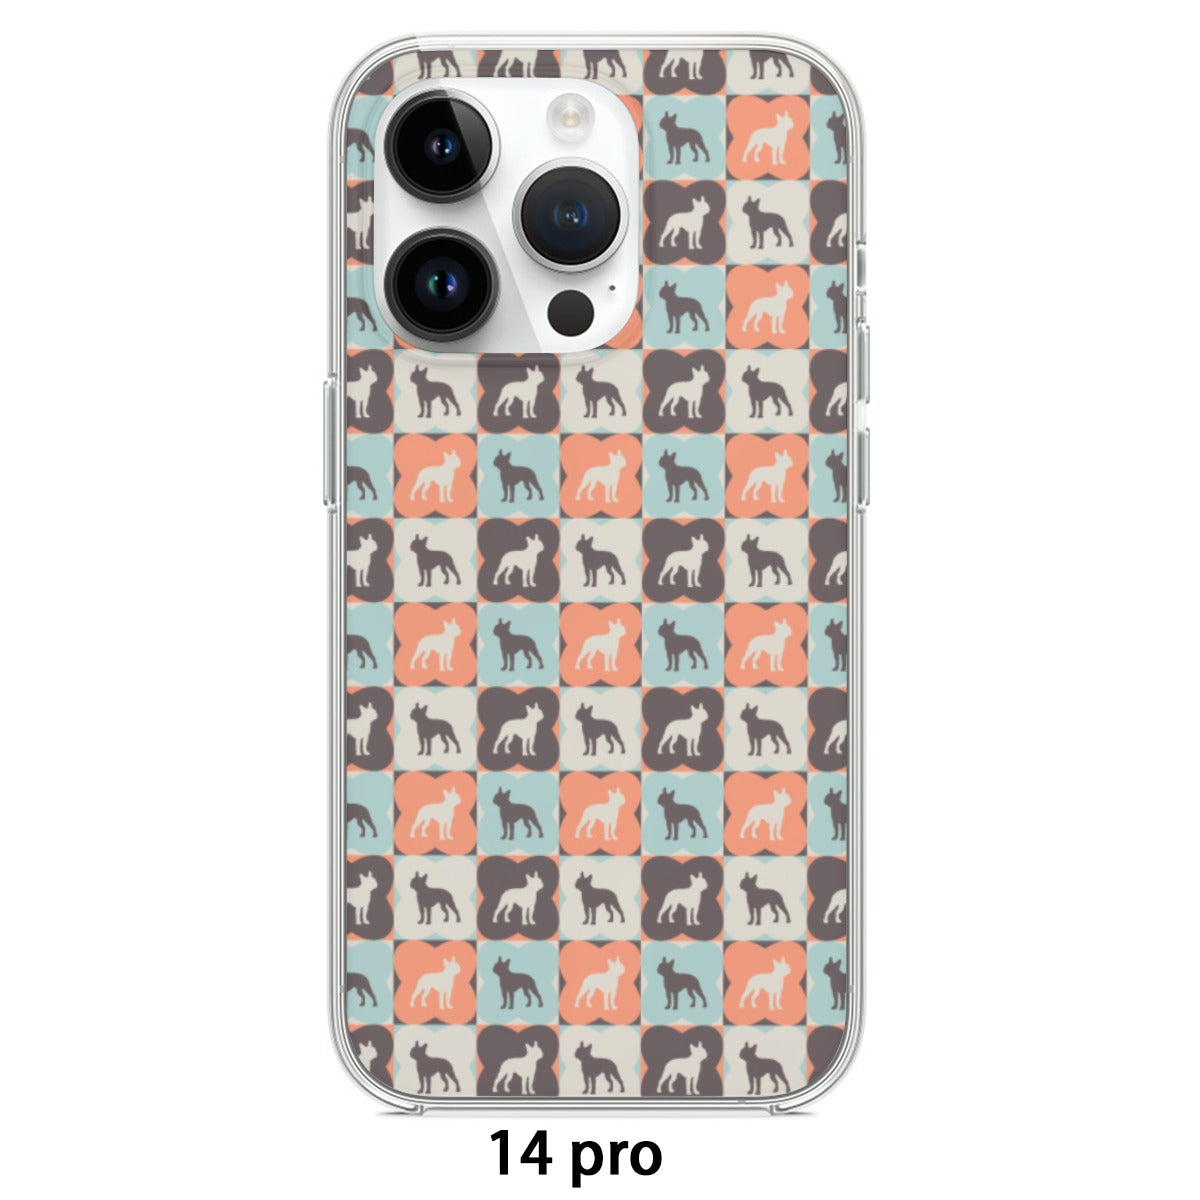 Jake  - iPhone case for Boston Terrier lovers